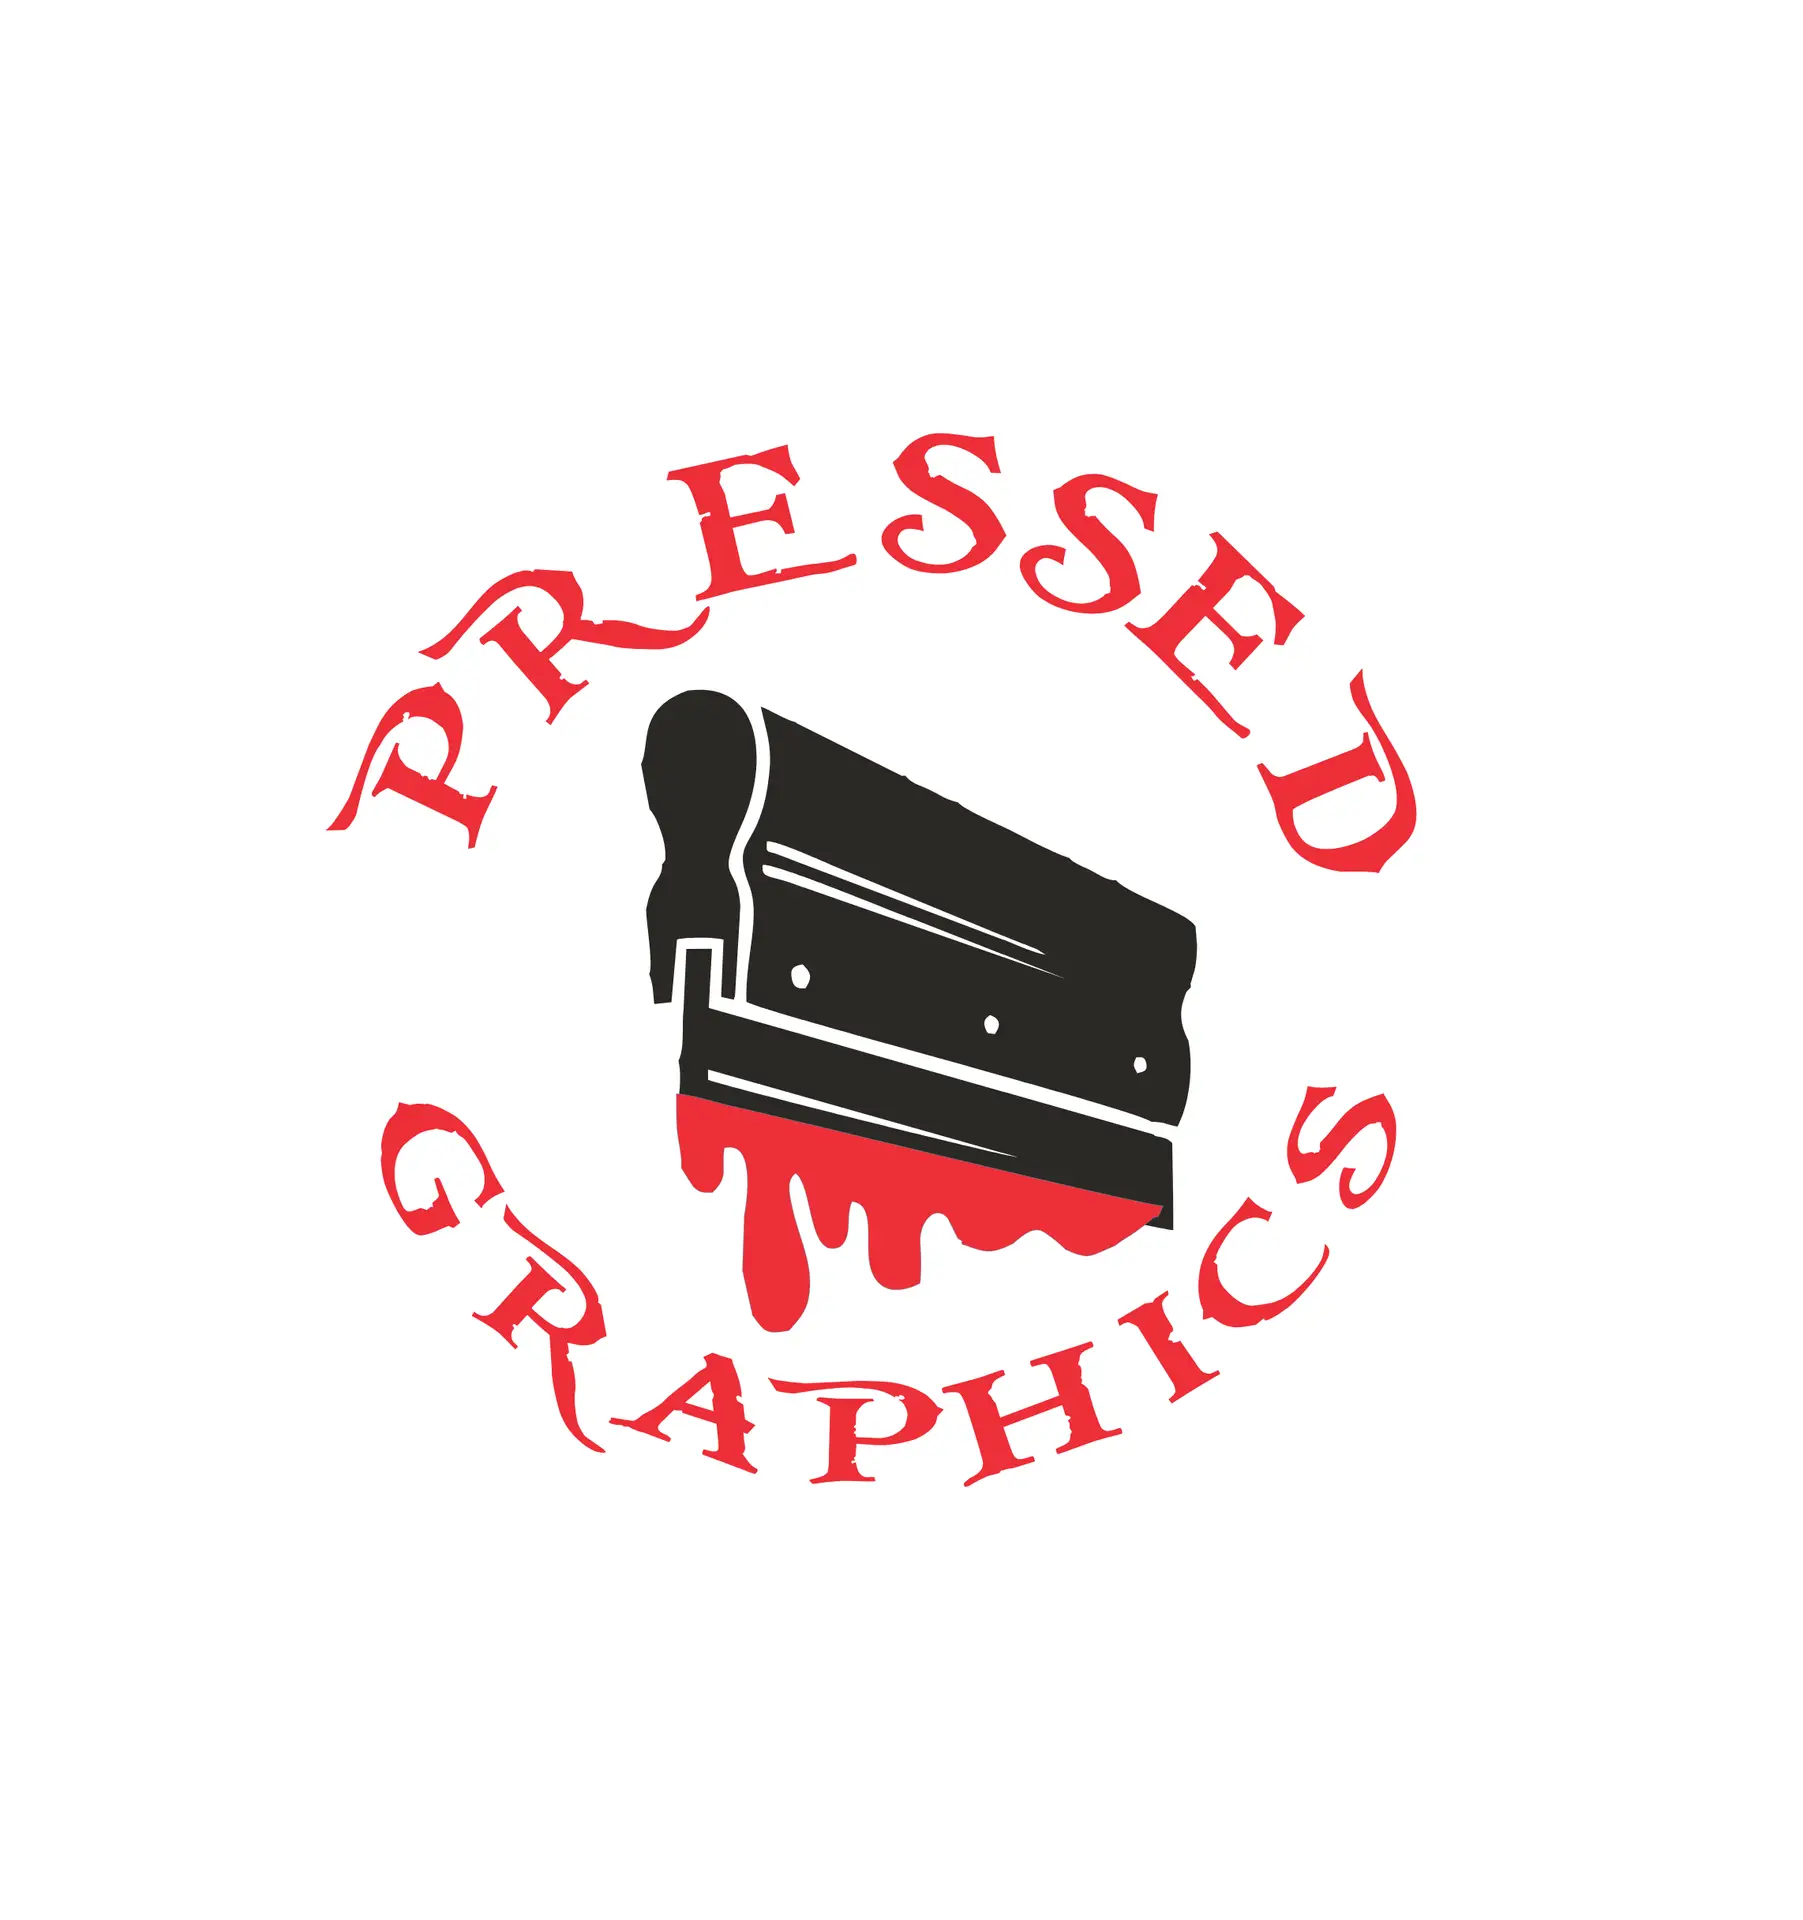 pressed_graphics_logo